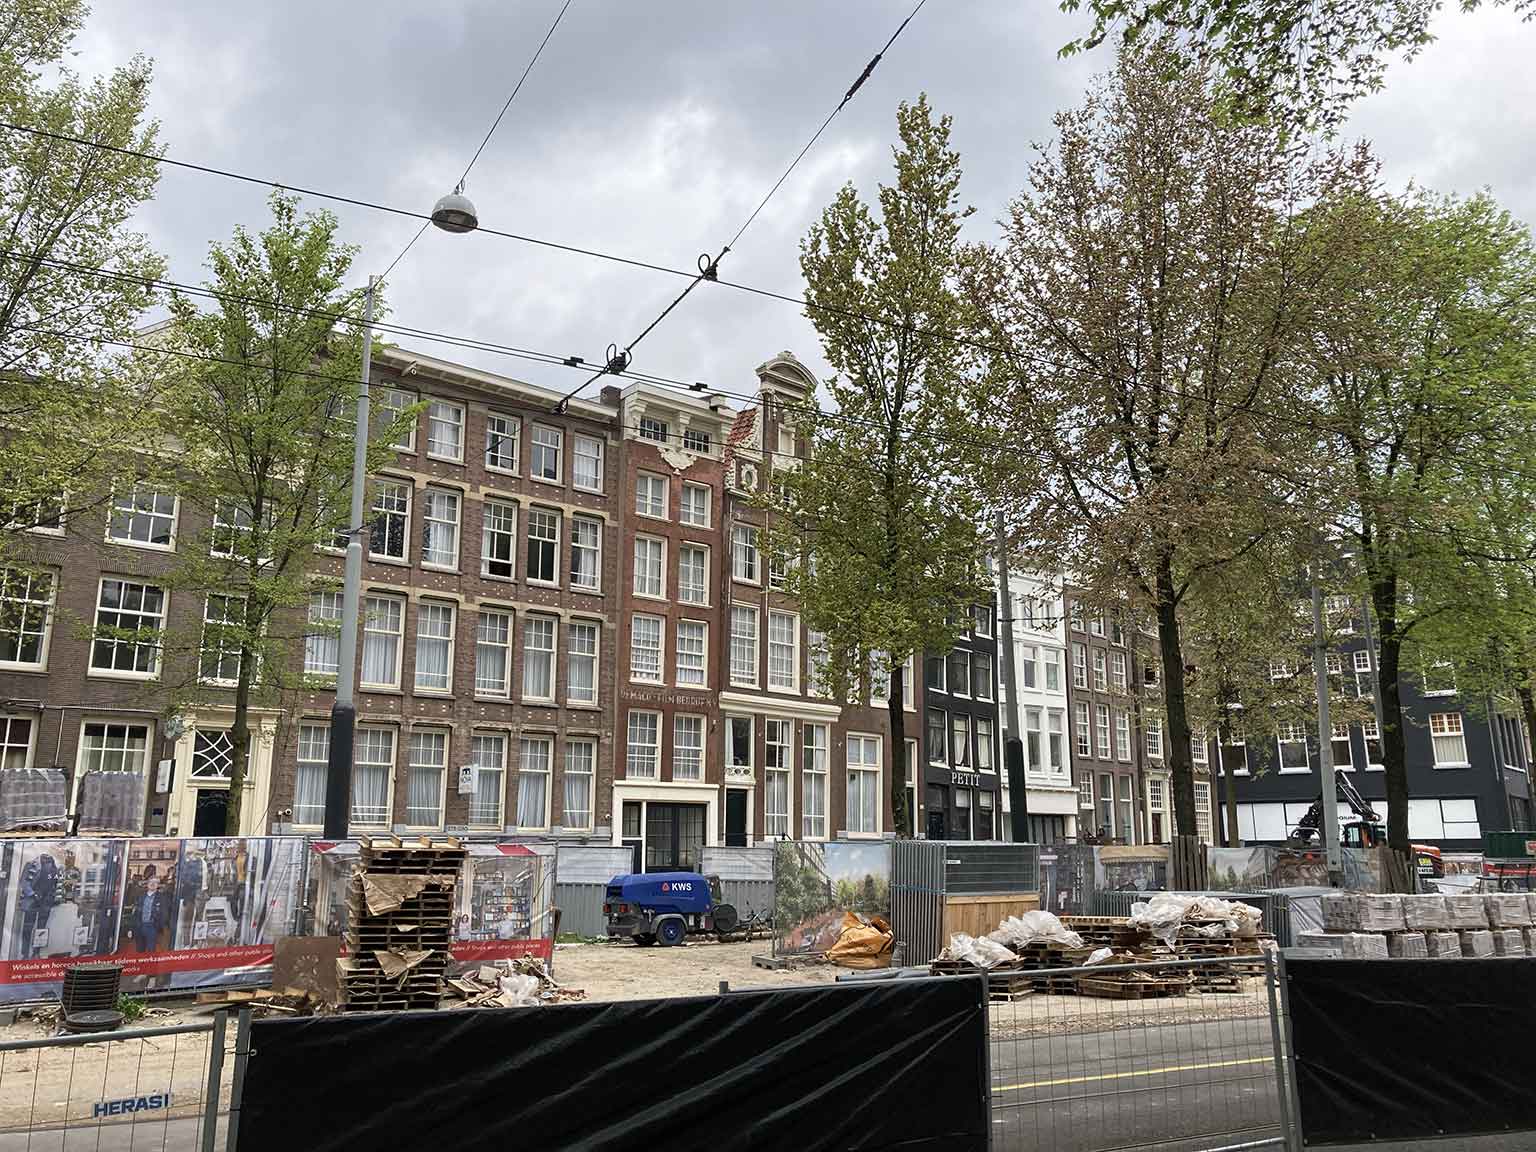 Ongoing restructuring of Postzegelmarkt, Amsterdam, in 2021